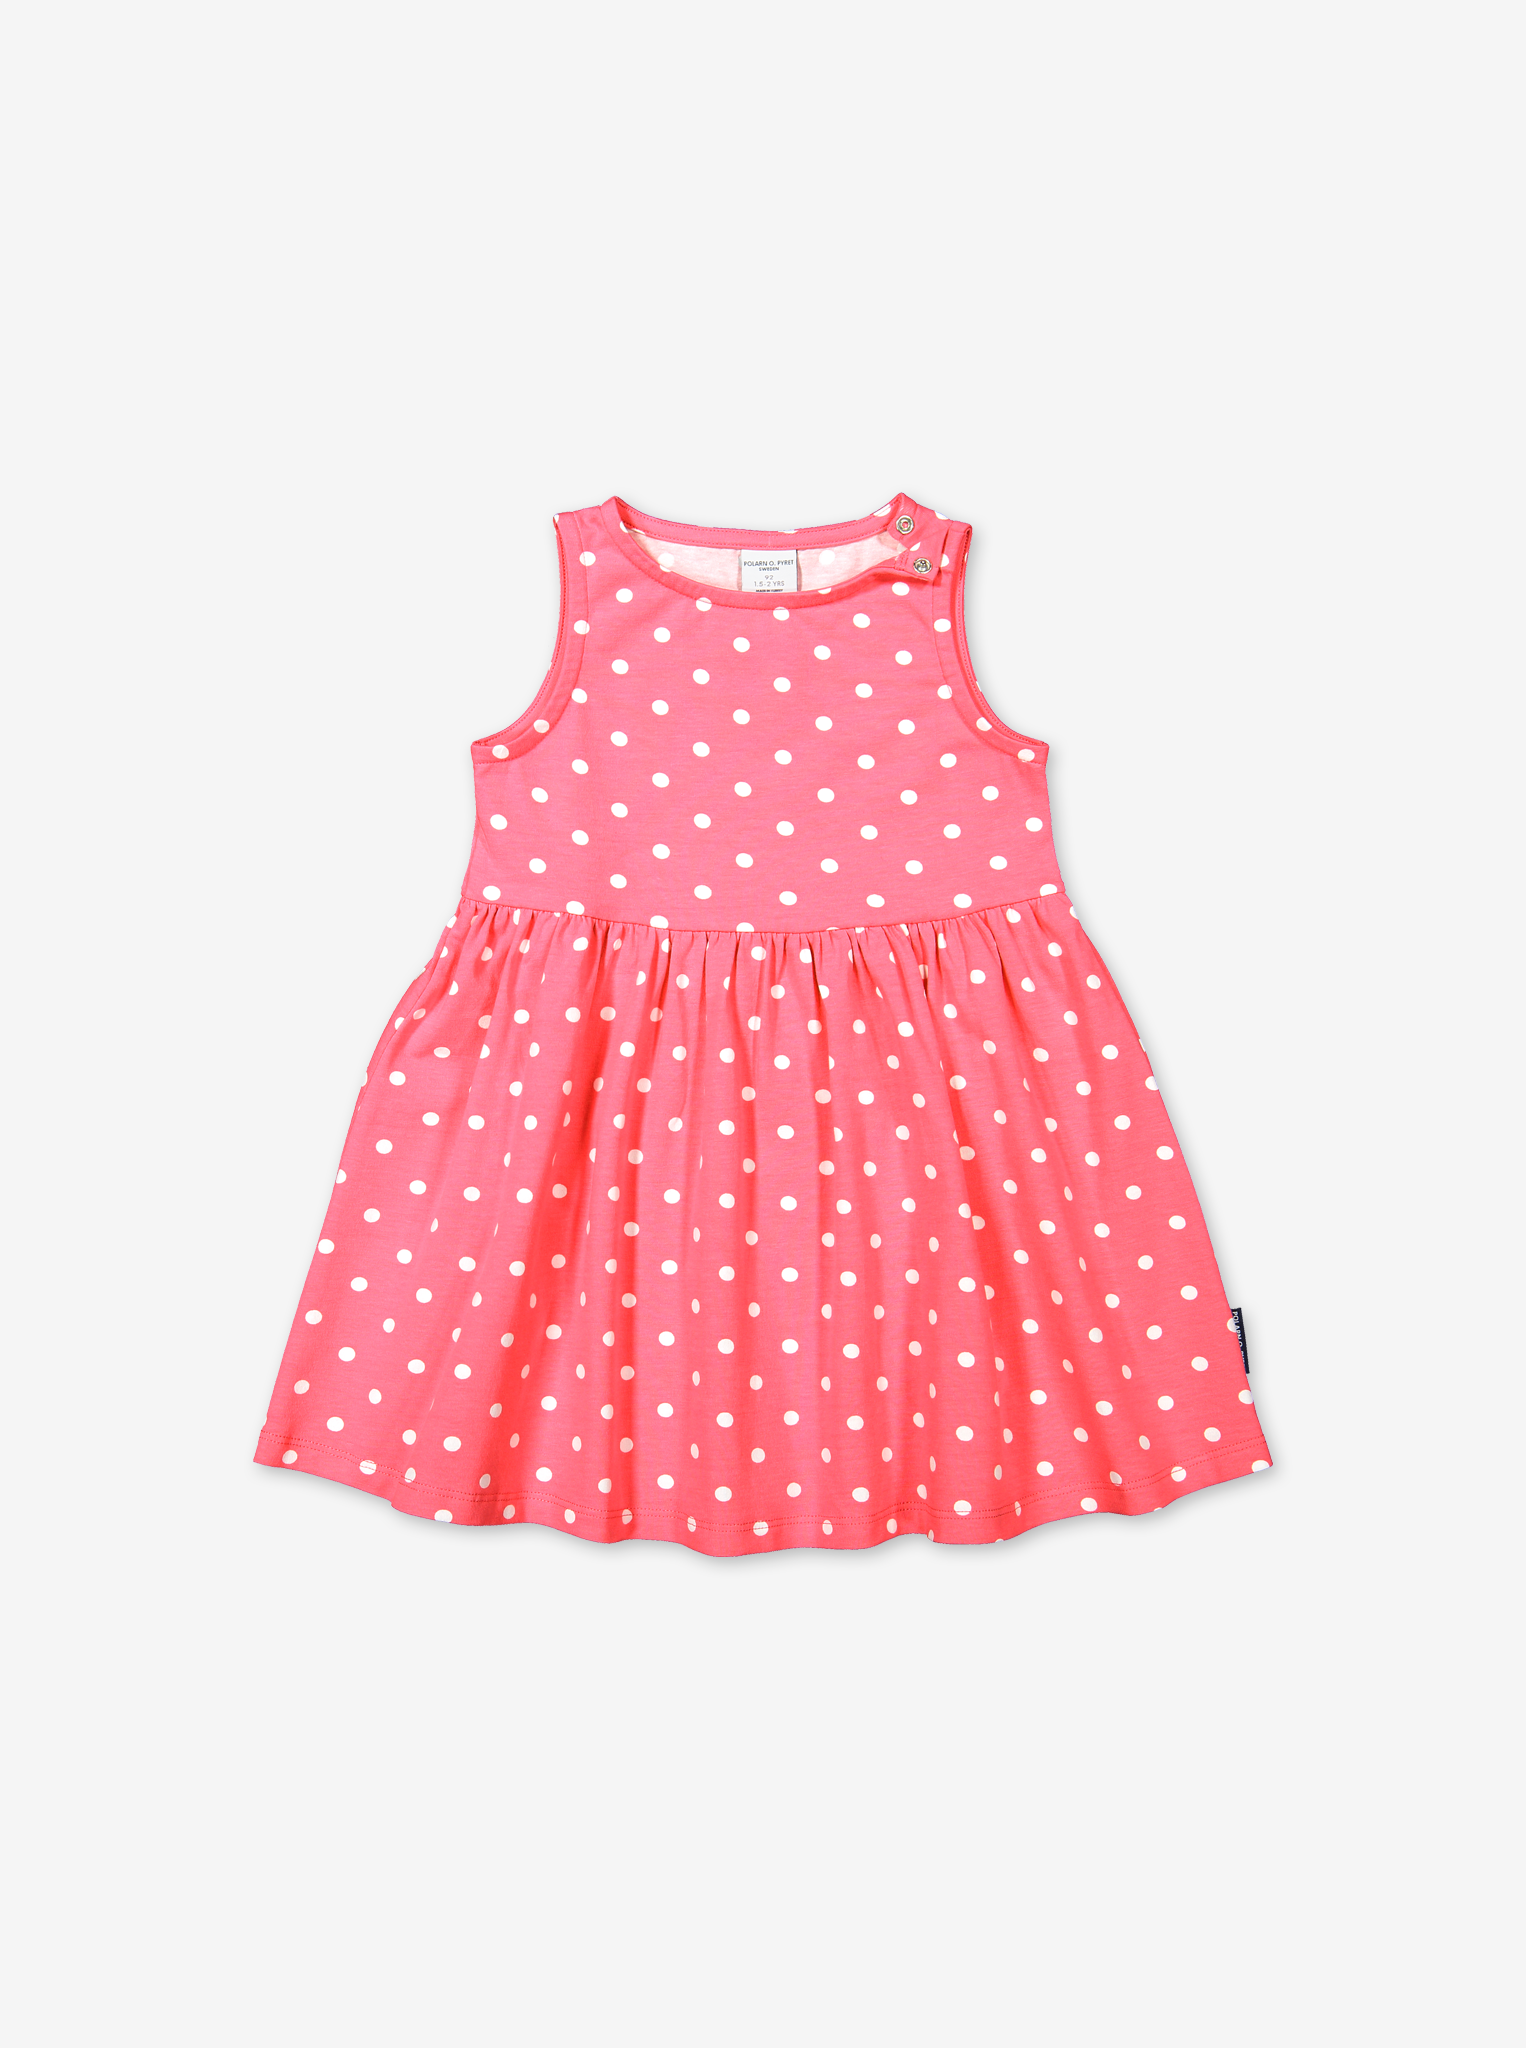 Polka Dot Kids Dress-Girl-1-6y-Pink